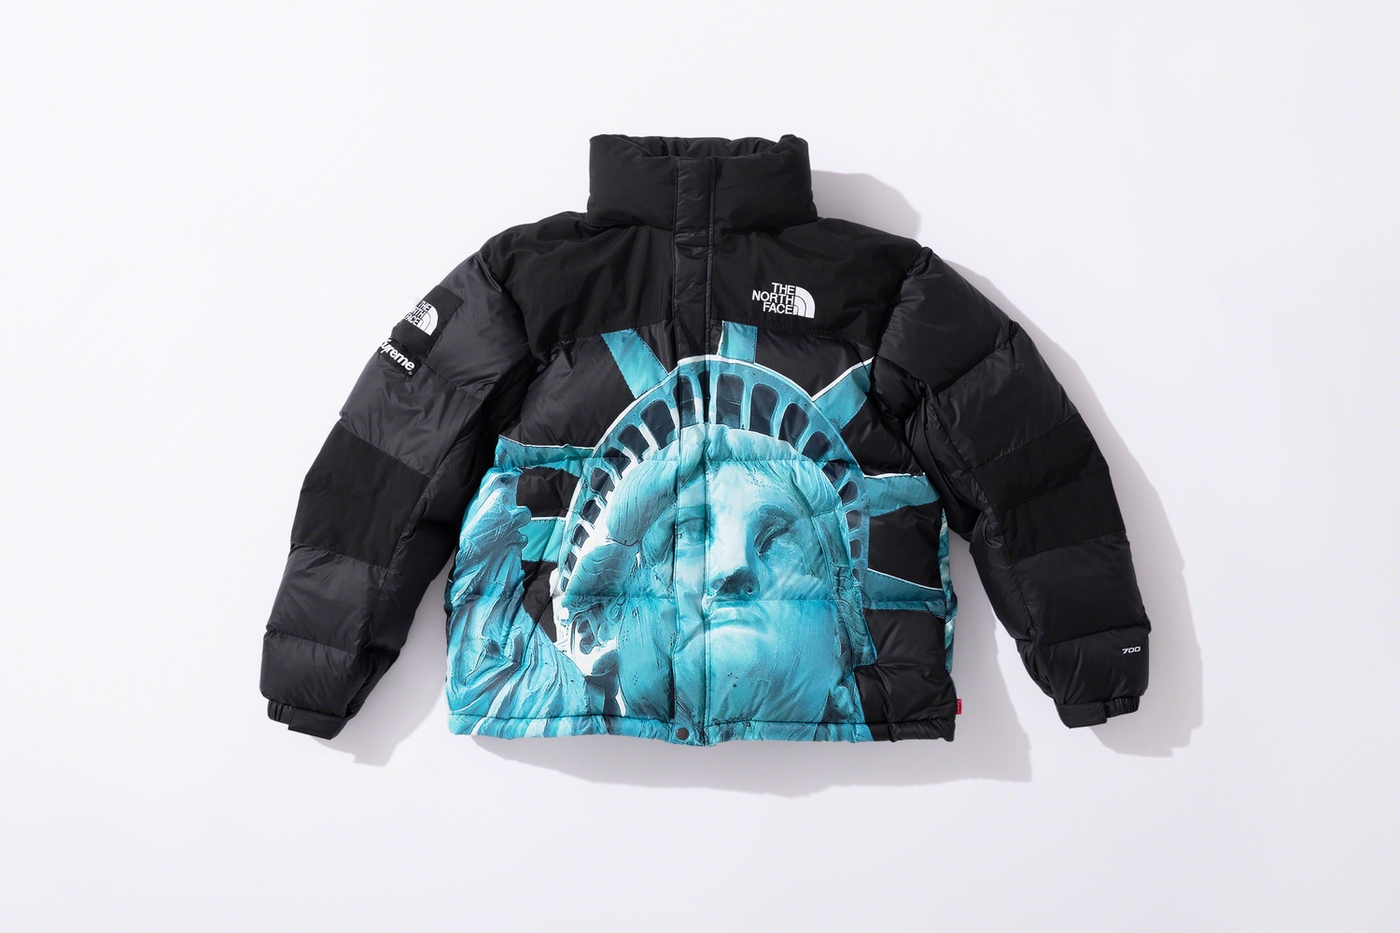 Statue of Liberty Baltoro Jacket with packable hood. (12/29)